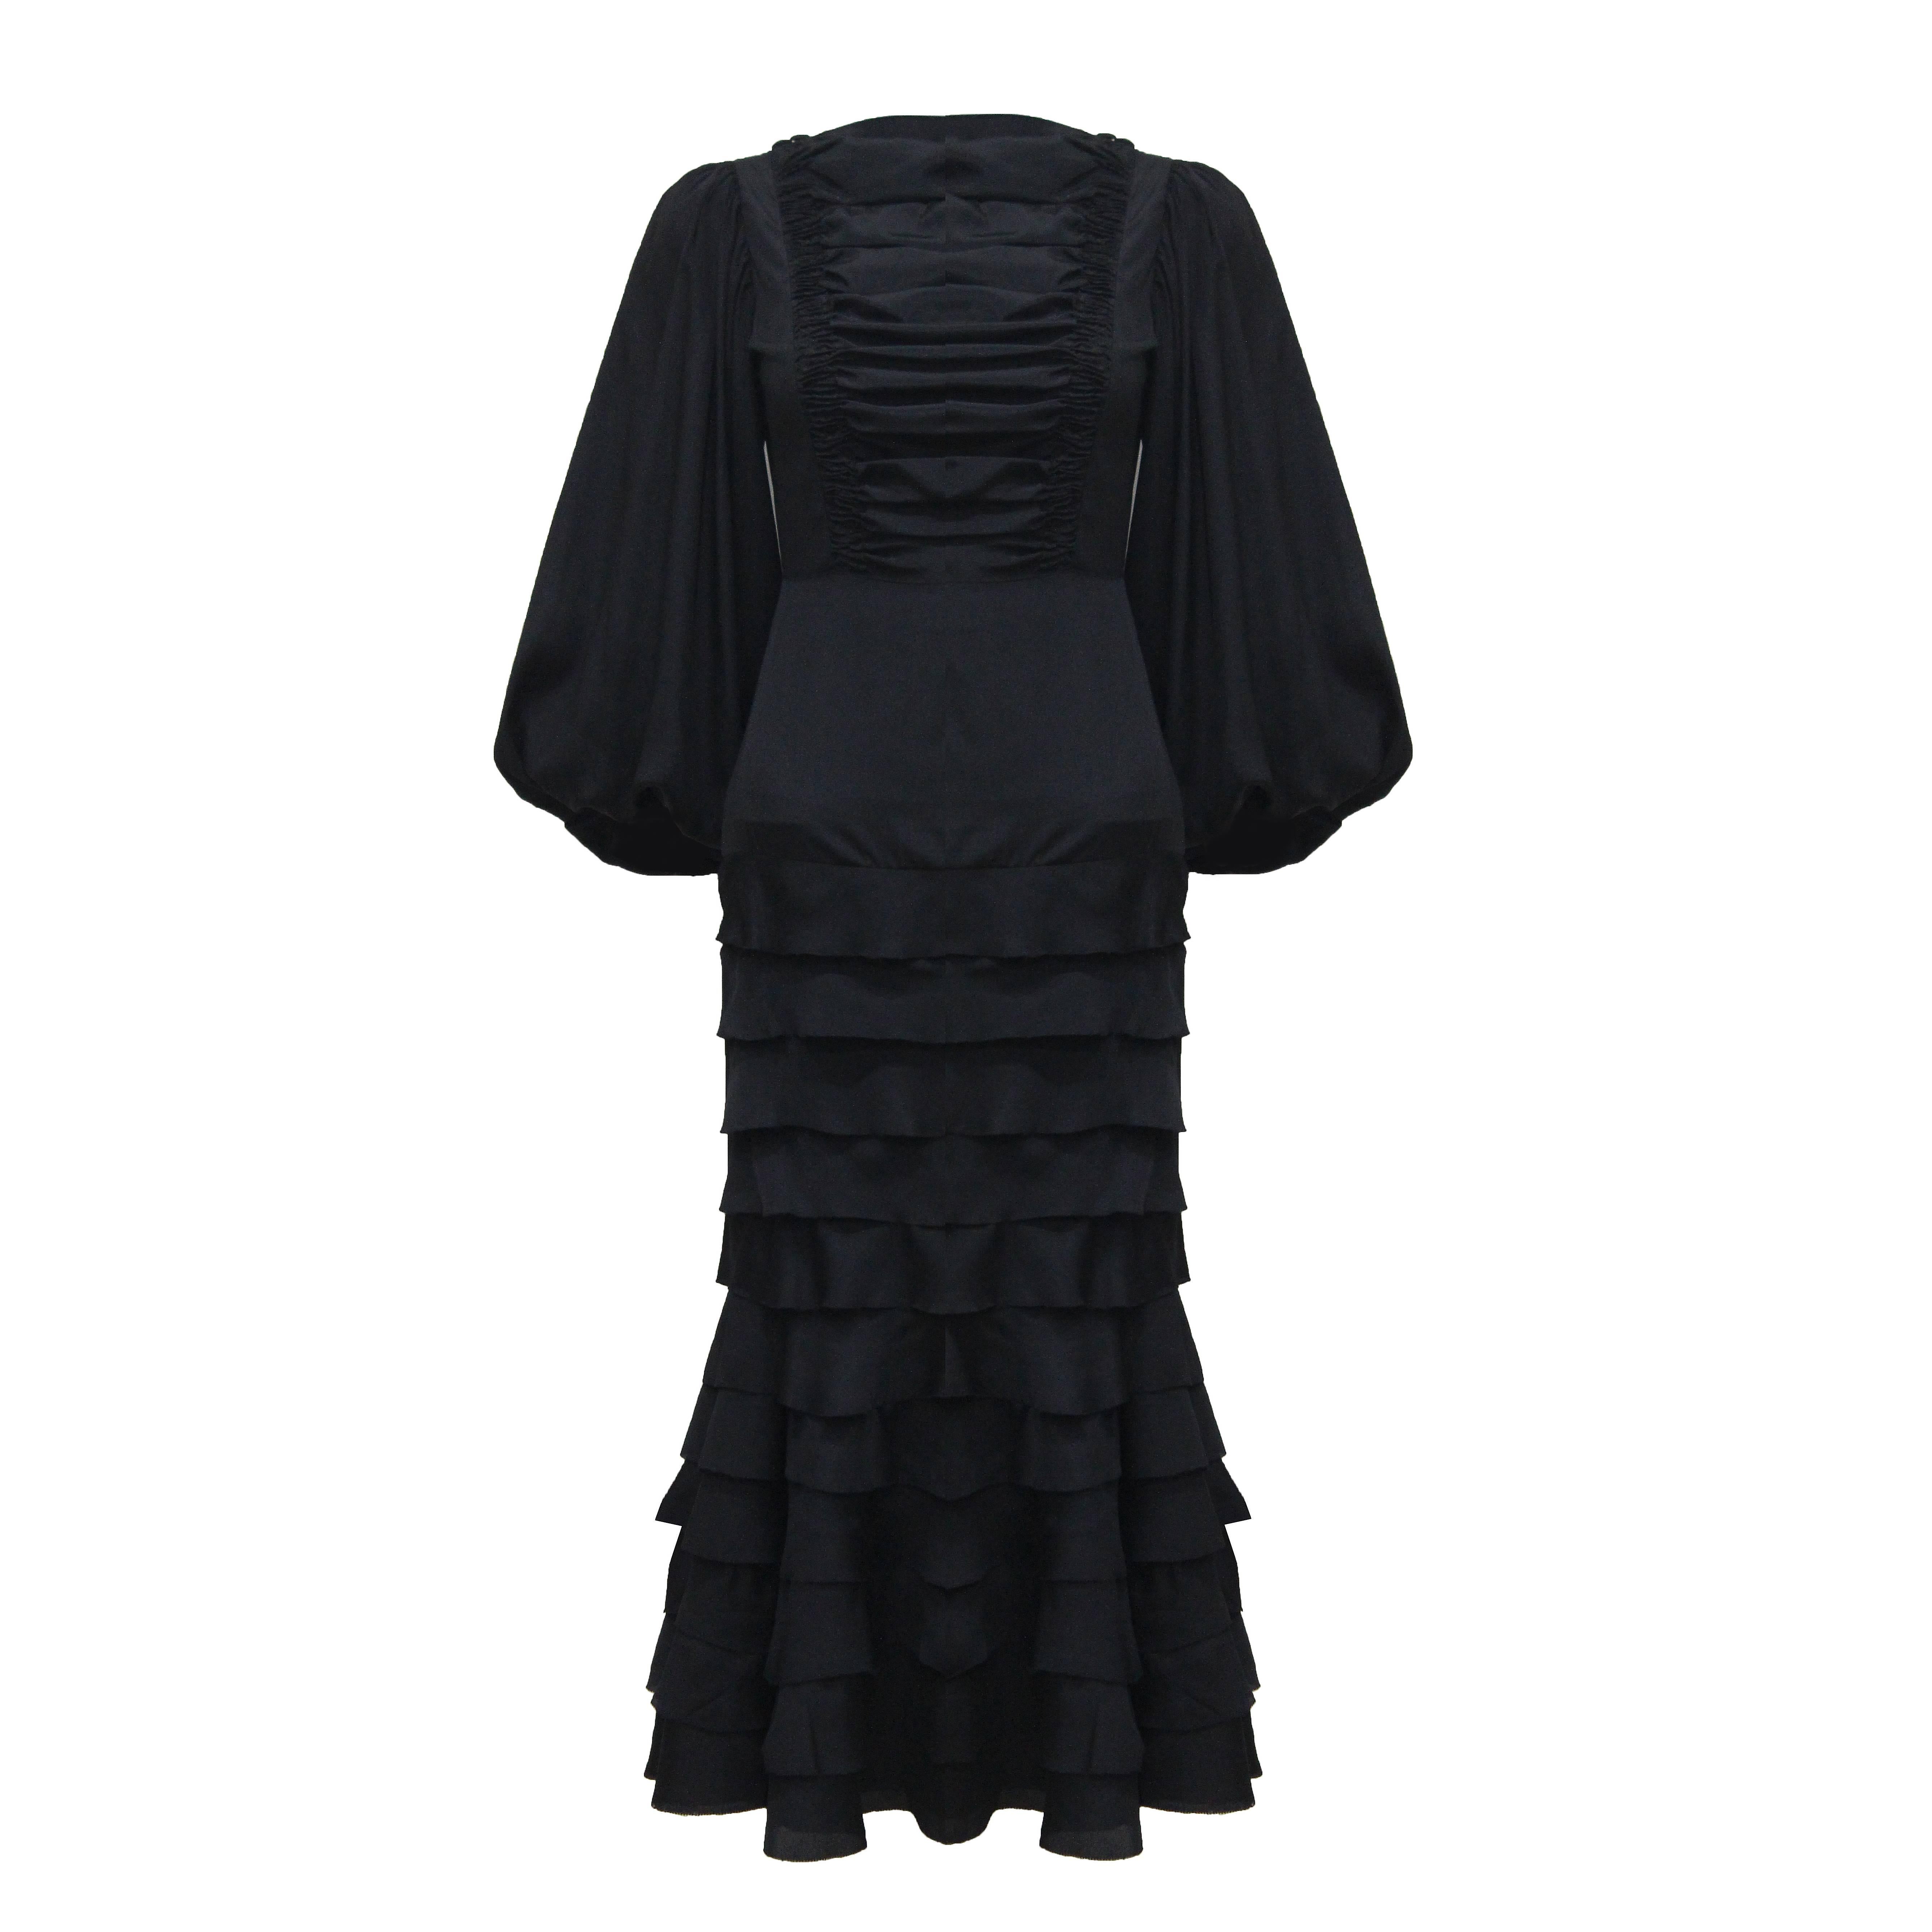 Exquisite 1940s Black Silk Evening Gown